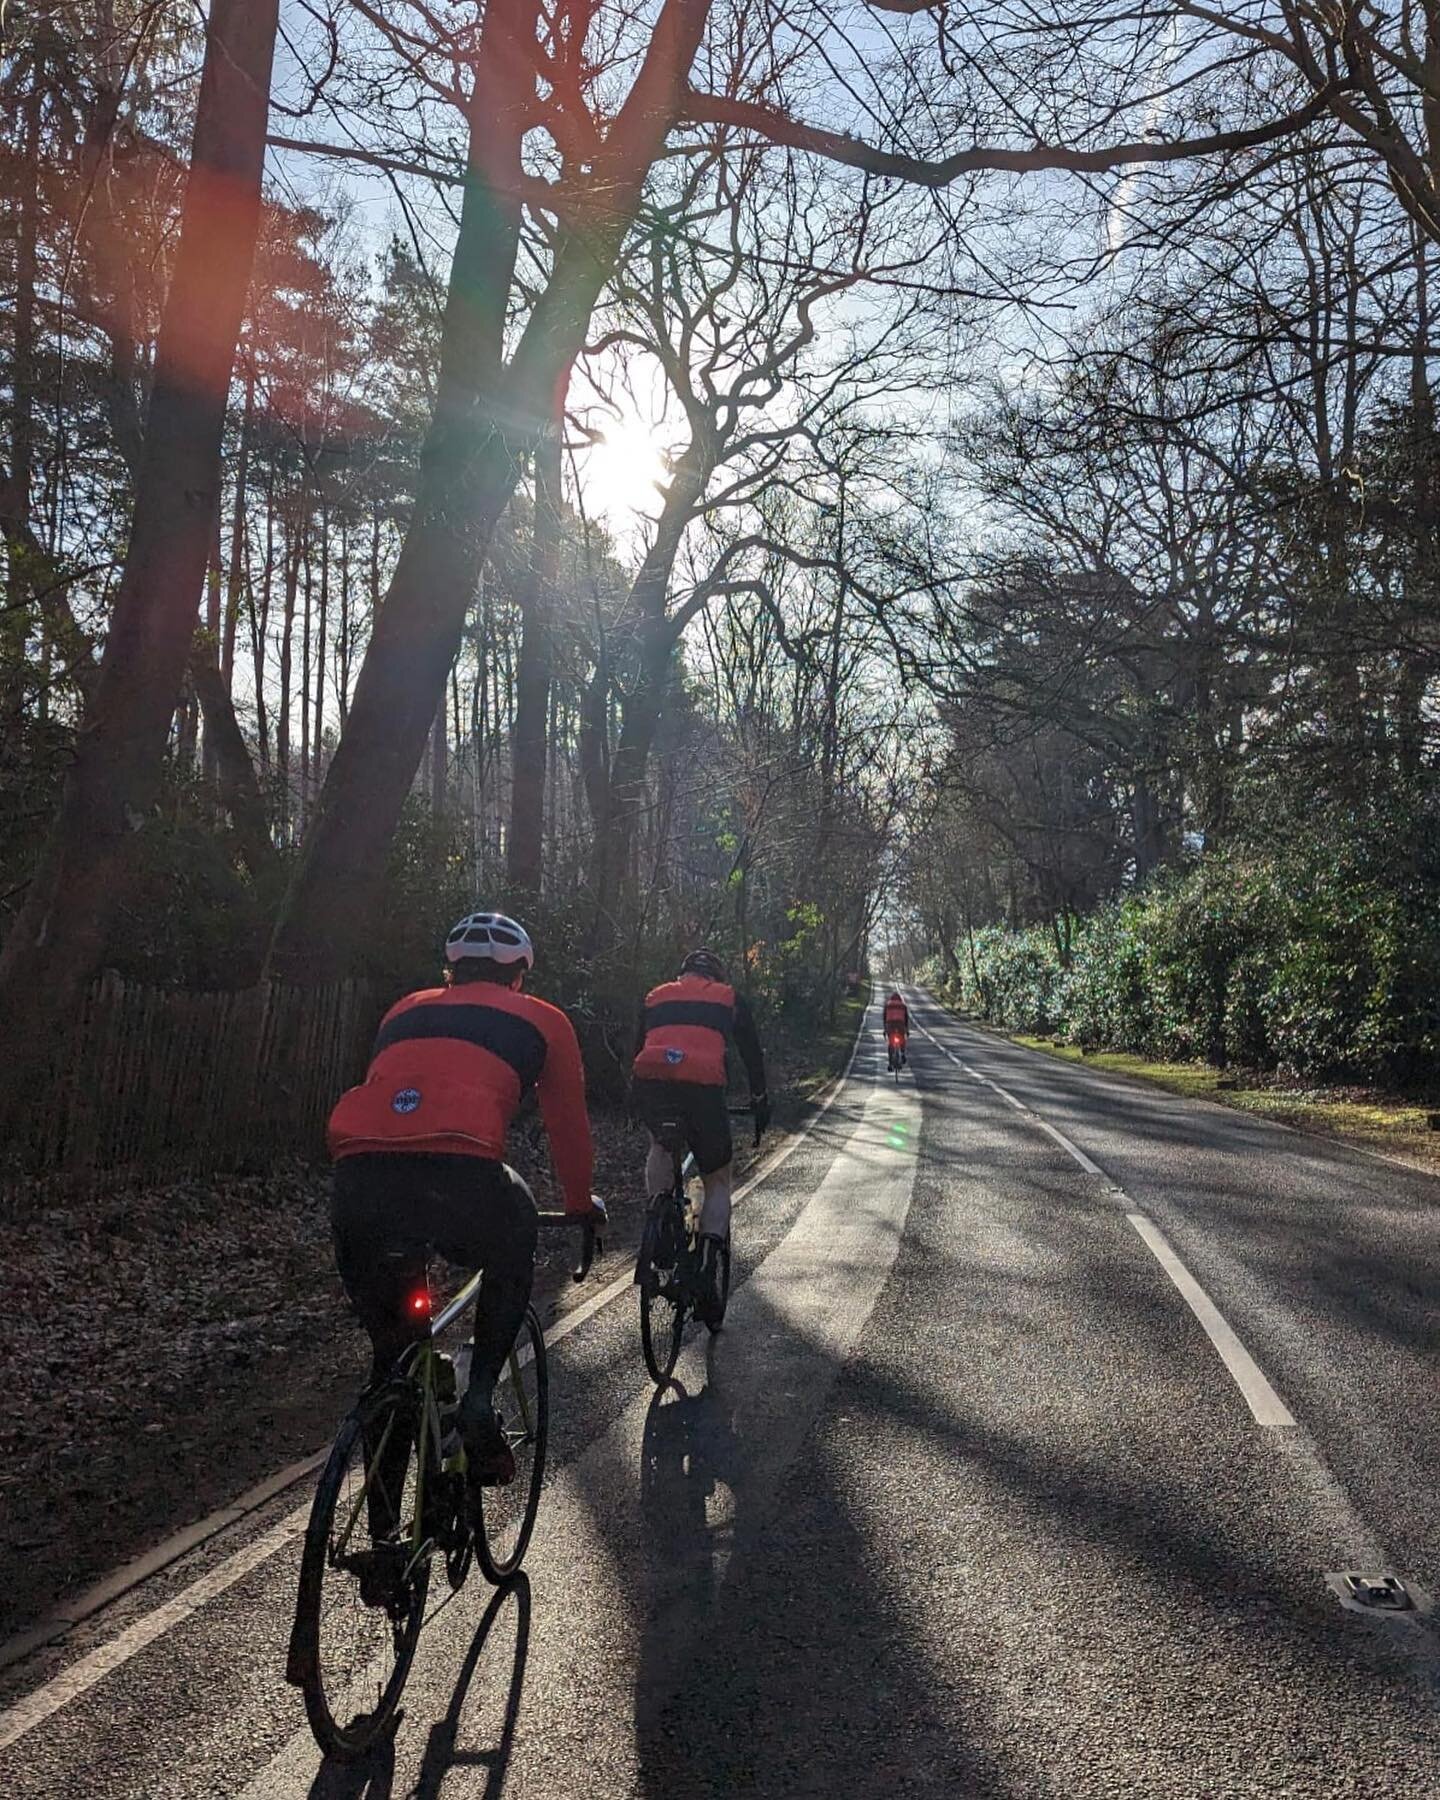 Balham CC Social Ride to Ripley, with sunshine ☀️. #cyclingclub #ridewithmates